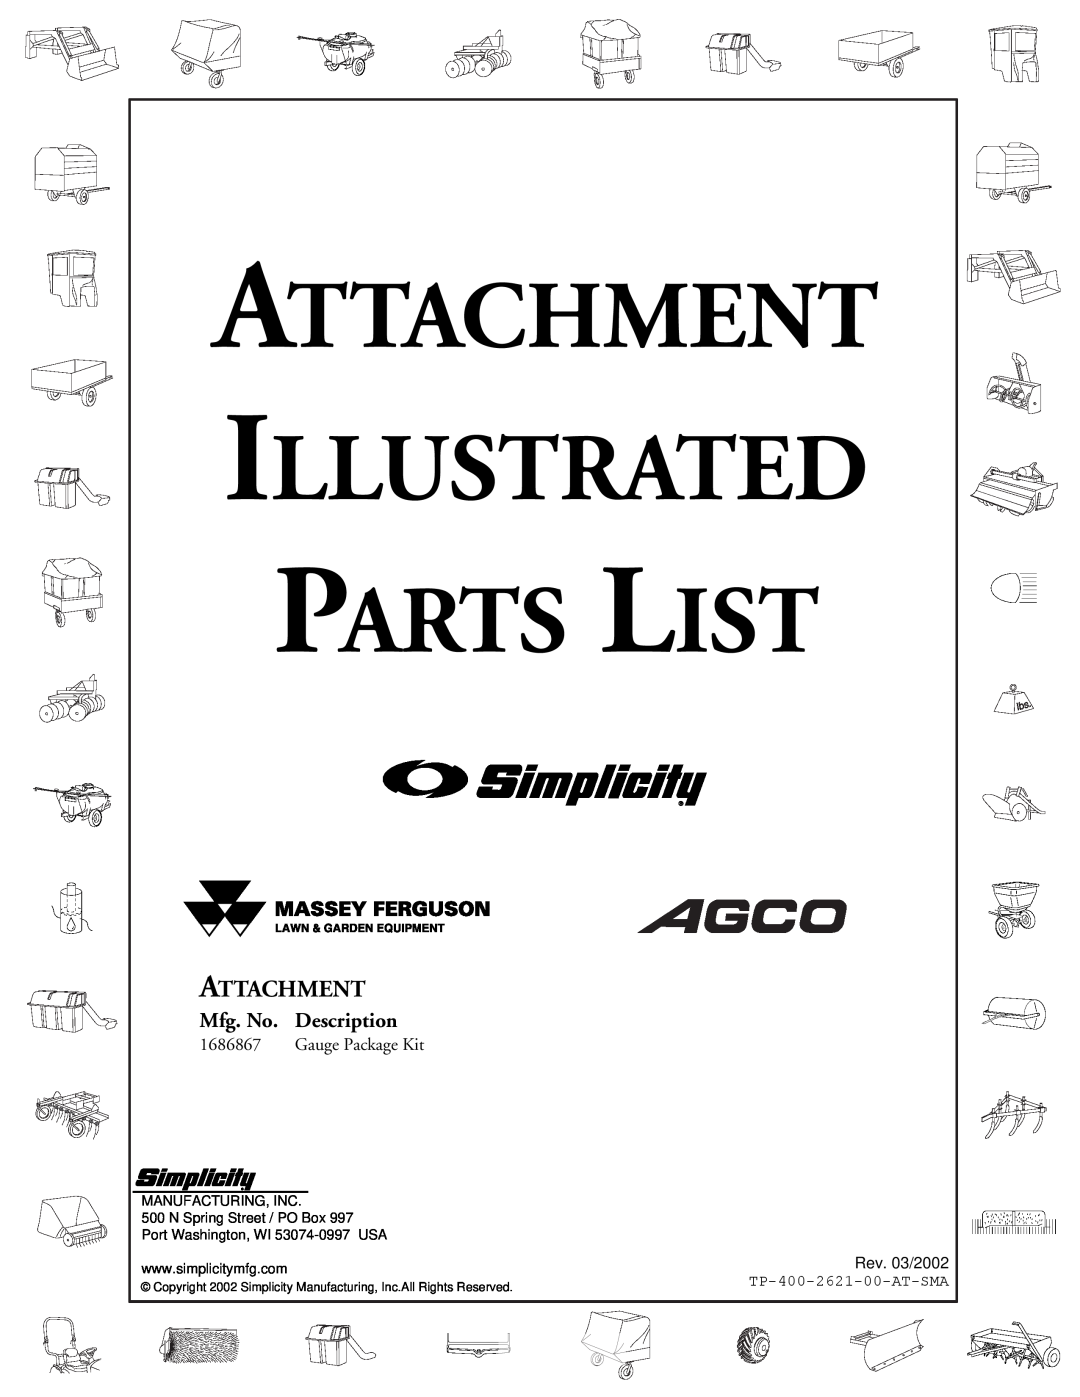 Snapper 2621 manual Attachment Illustrated Parts List, Mfg. No. Description, Gauge Package Kit, Rev. 03/2002 